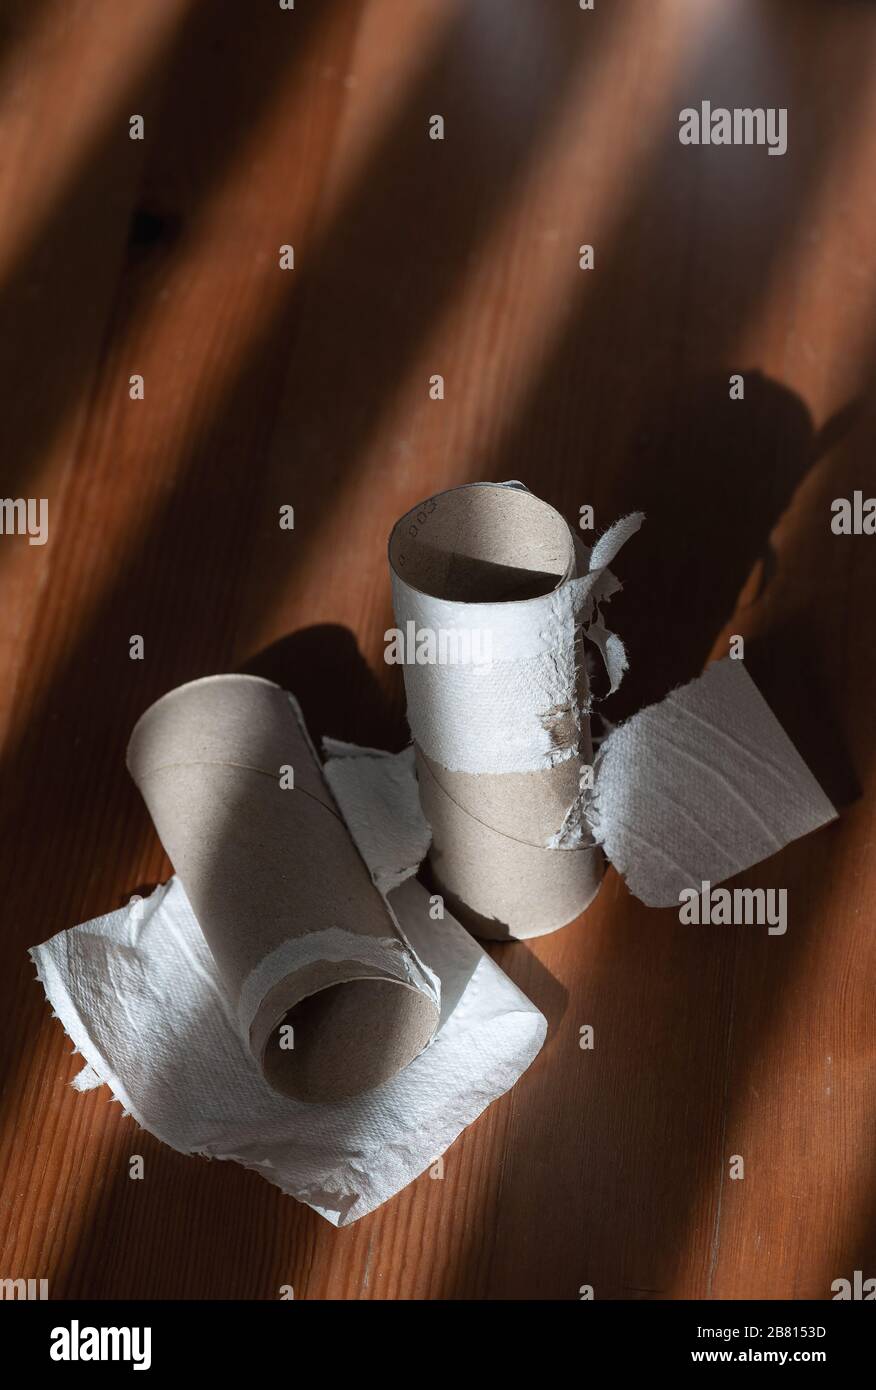 Empty toilet rolls on the floor with dramatic lighting. Stock Photo